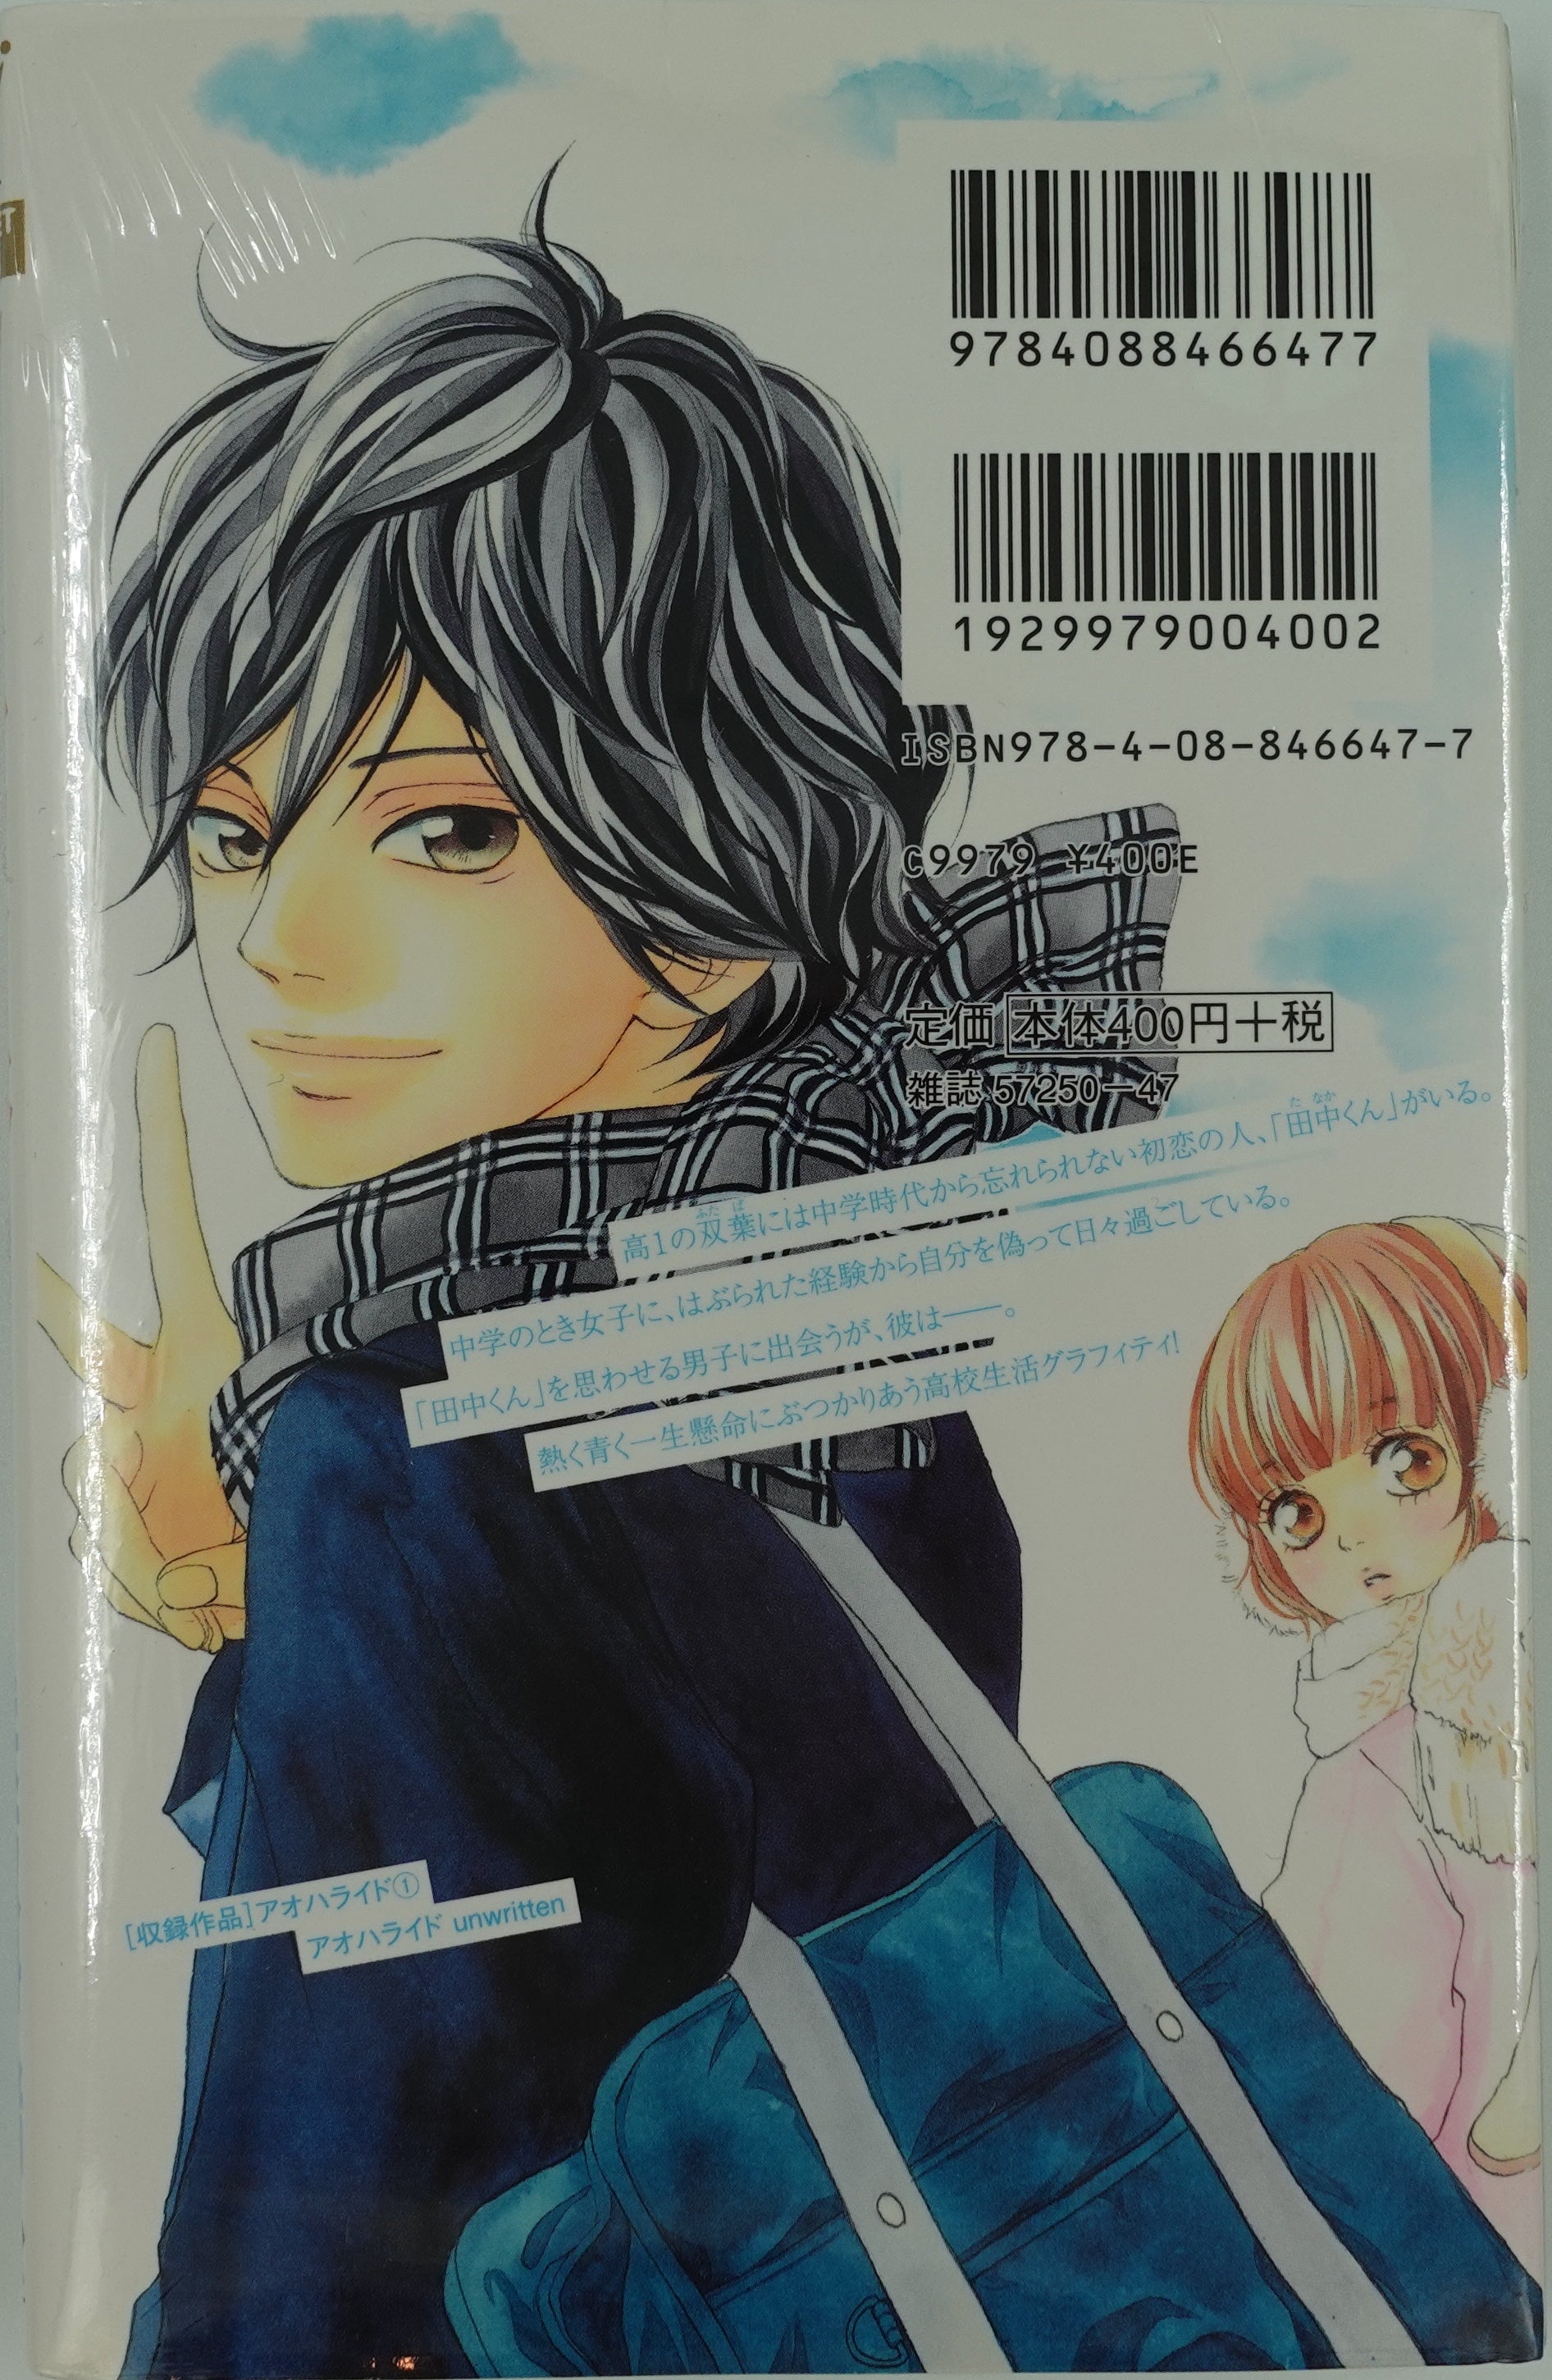 Blue Spring Ride Ao Haru Ride Japan Anime Novel Book Vol 1